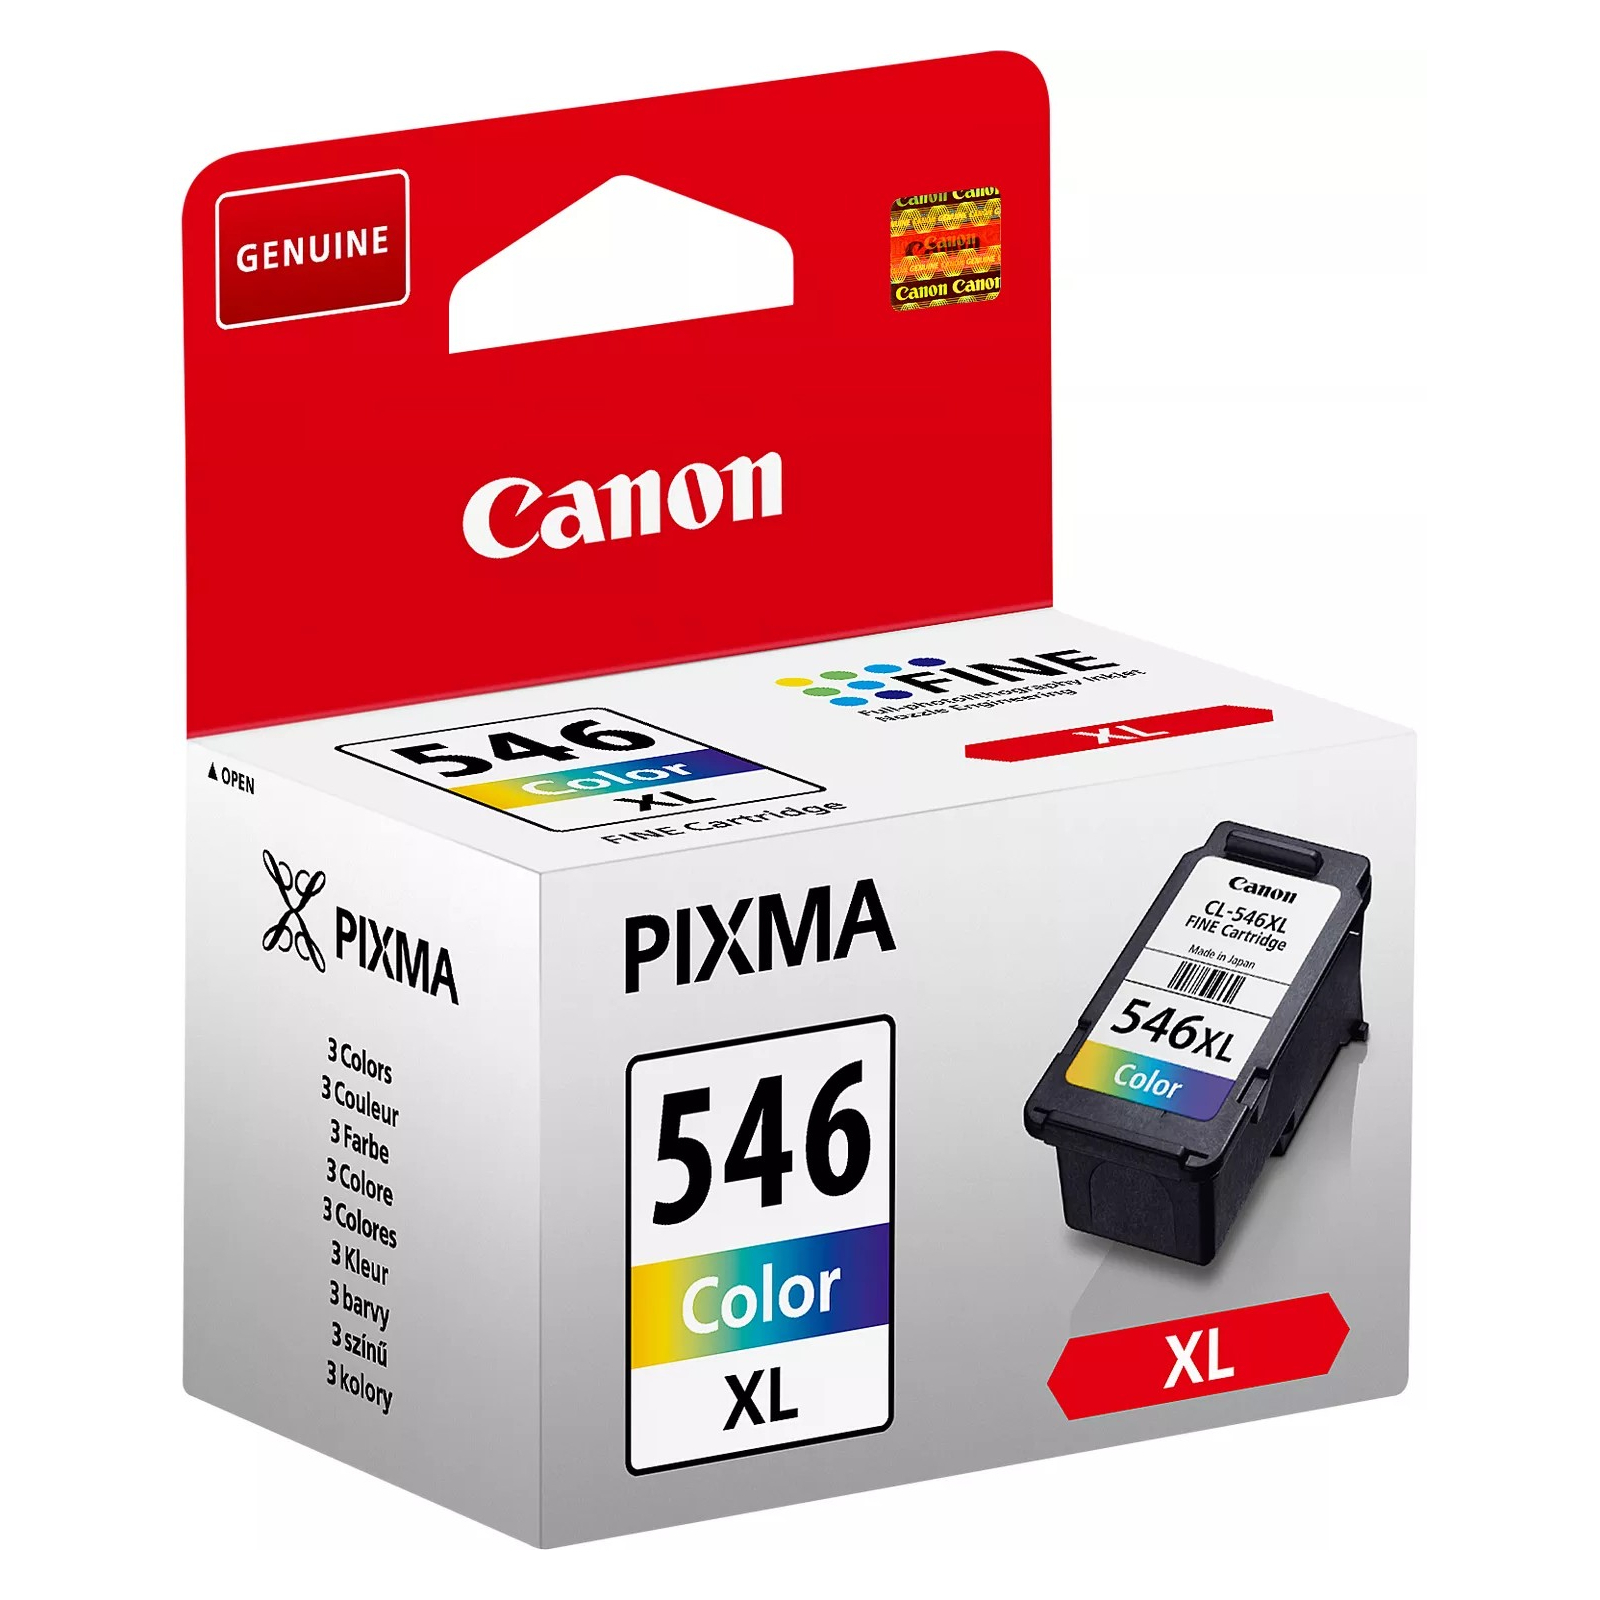 Картридж Canon CL-546XL colour, 13мл (8288B001)